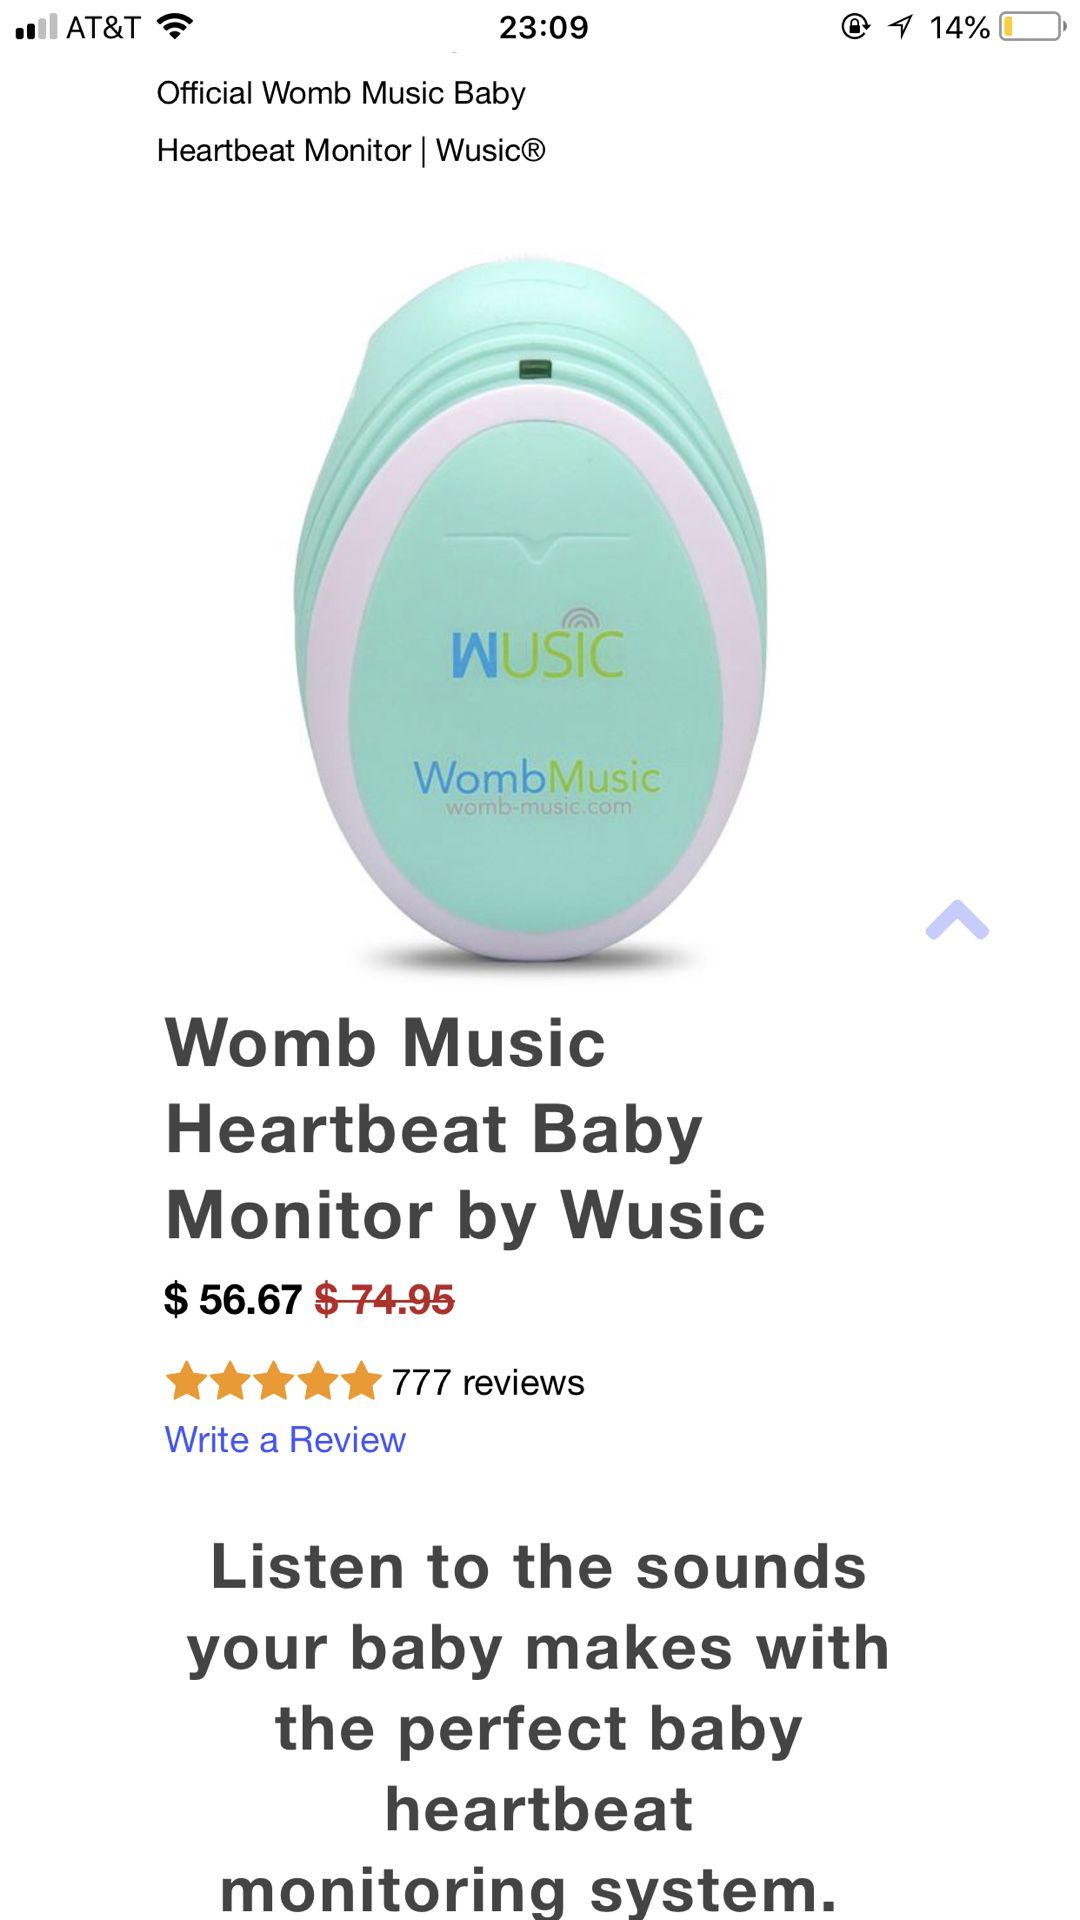 Womb Music Baby Heartbeat Monitor